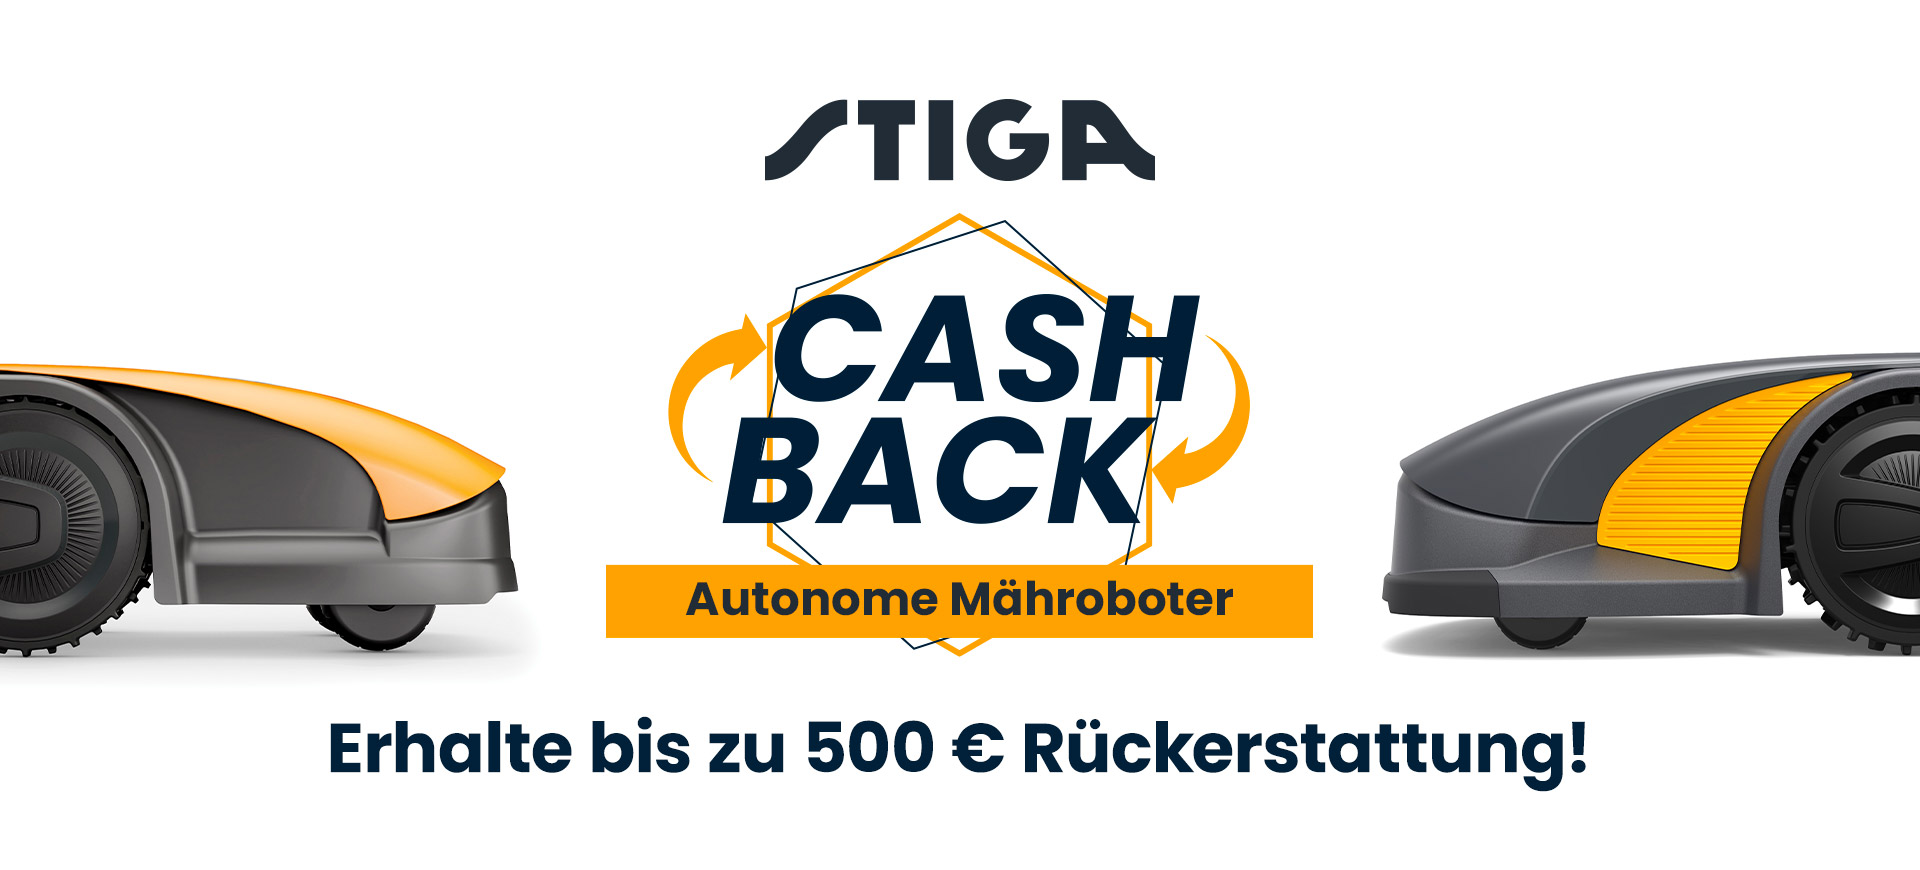 Stiga Cash Back Aktion